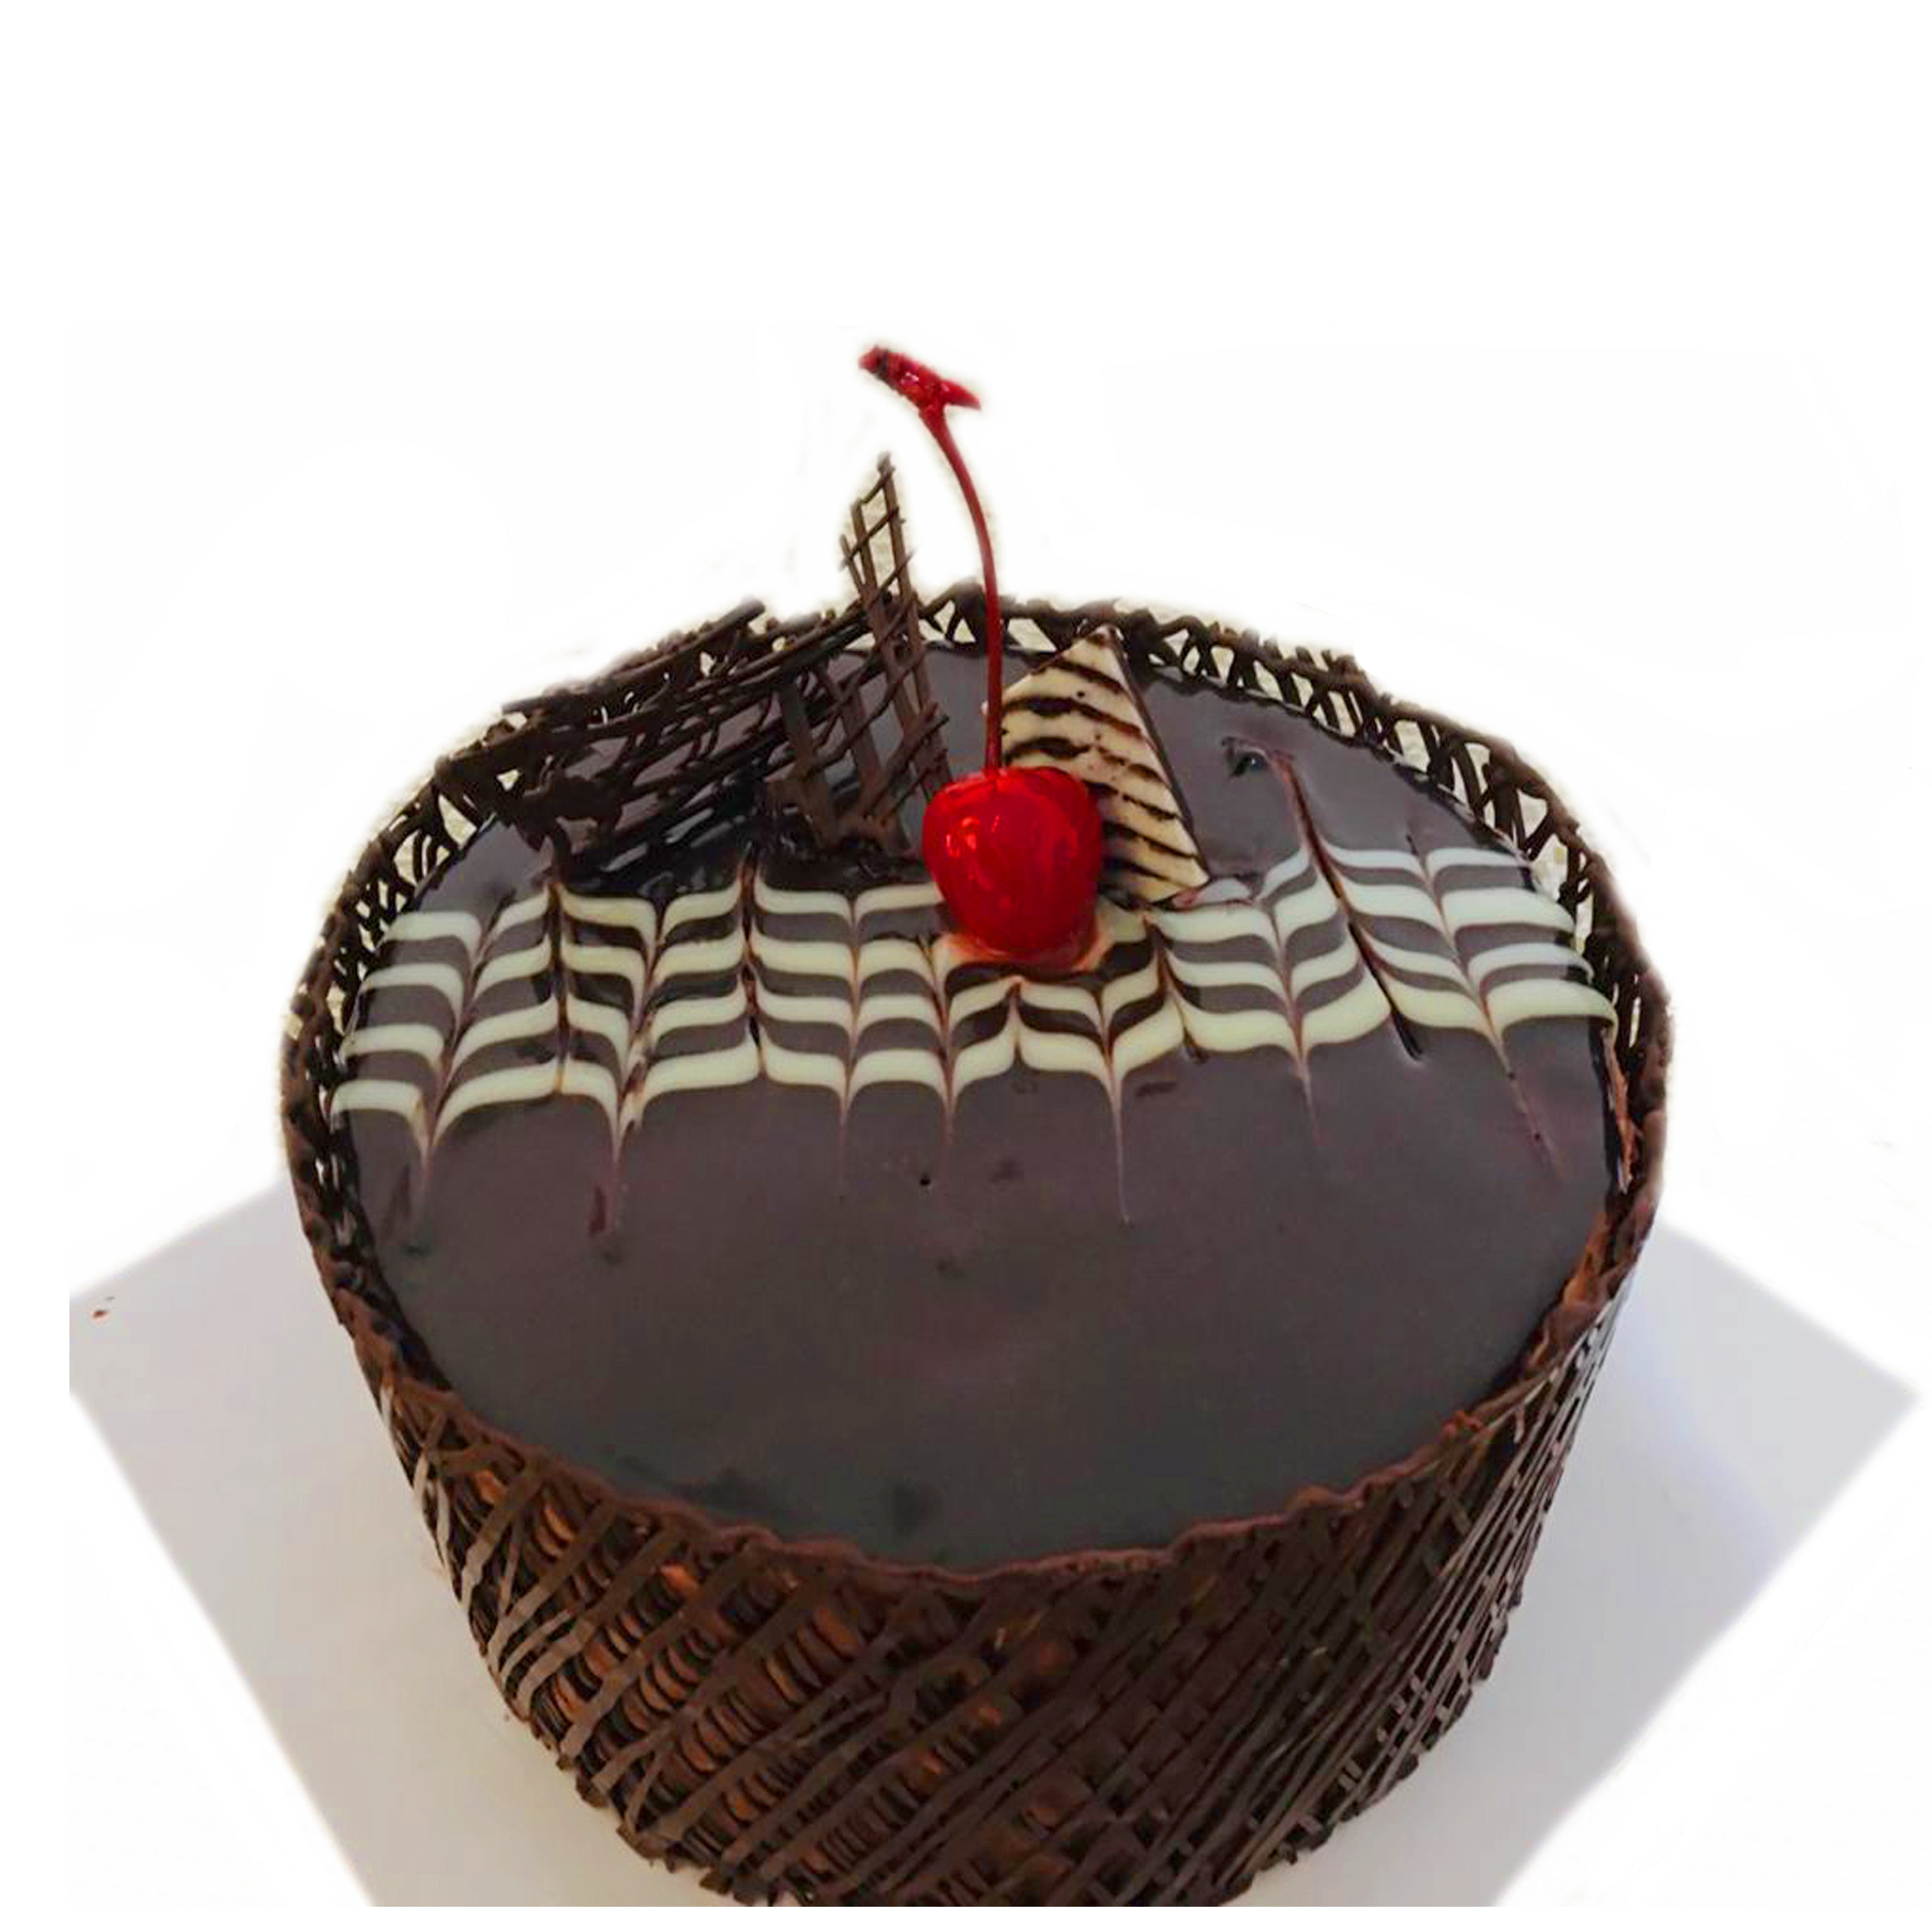 Chocolate Mousse Cake by Yalu Yalu yaluyalu